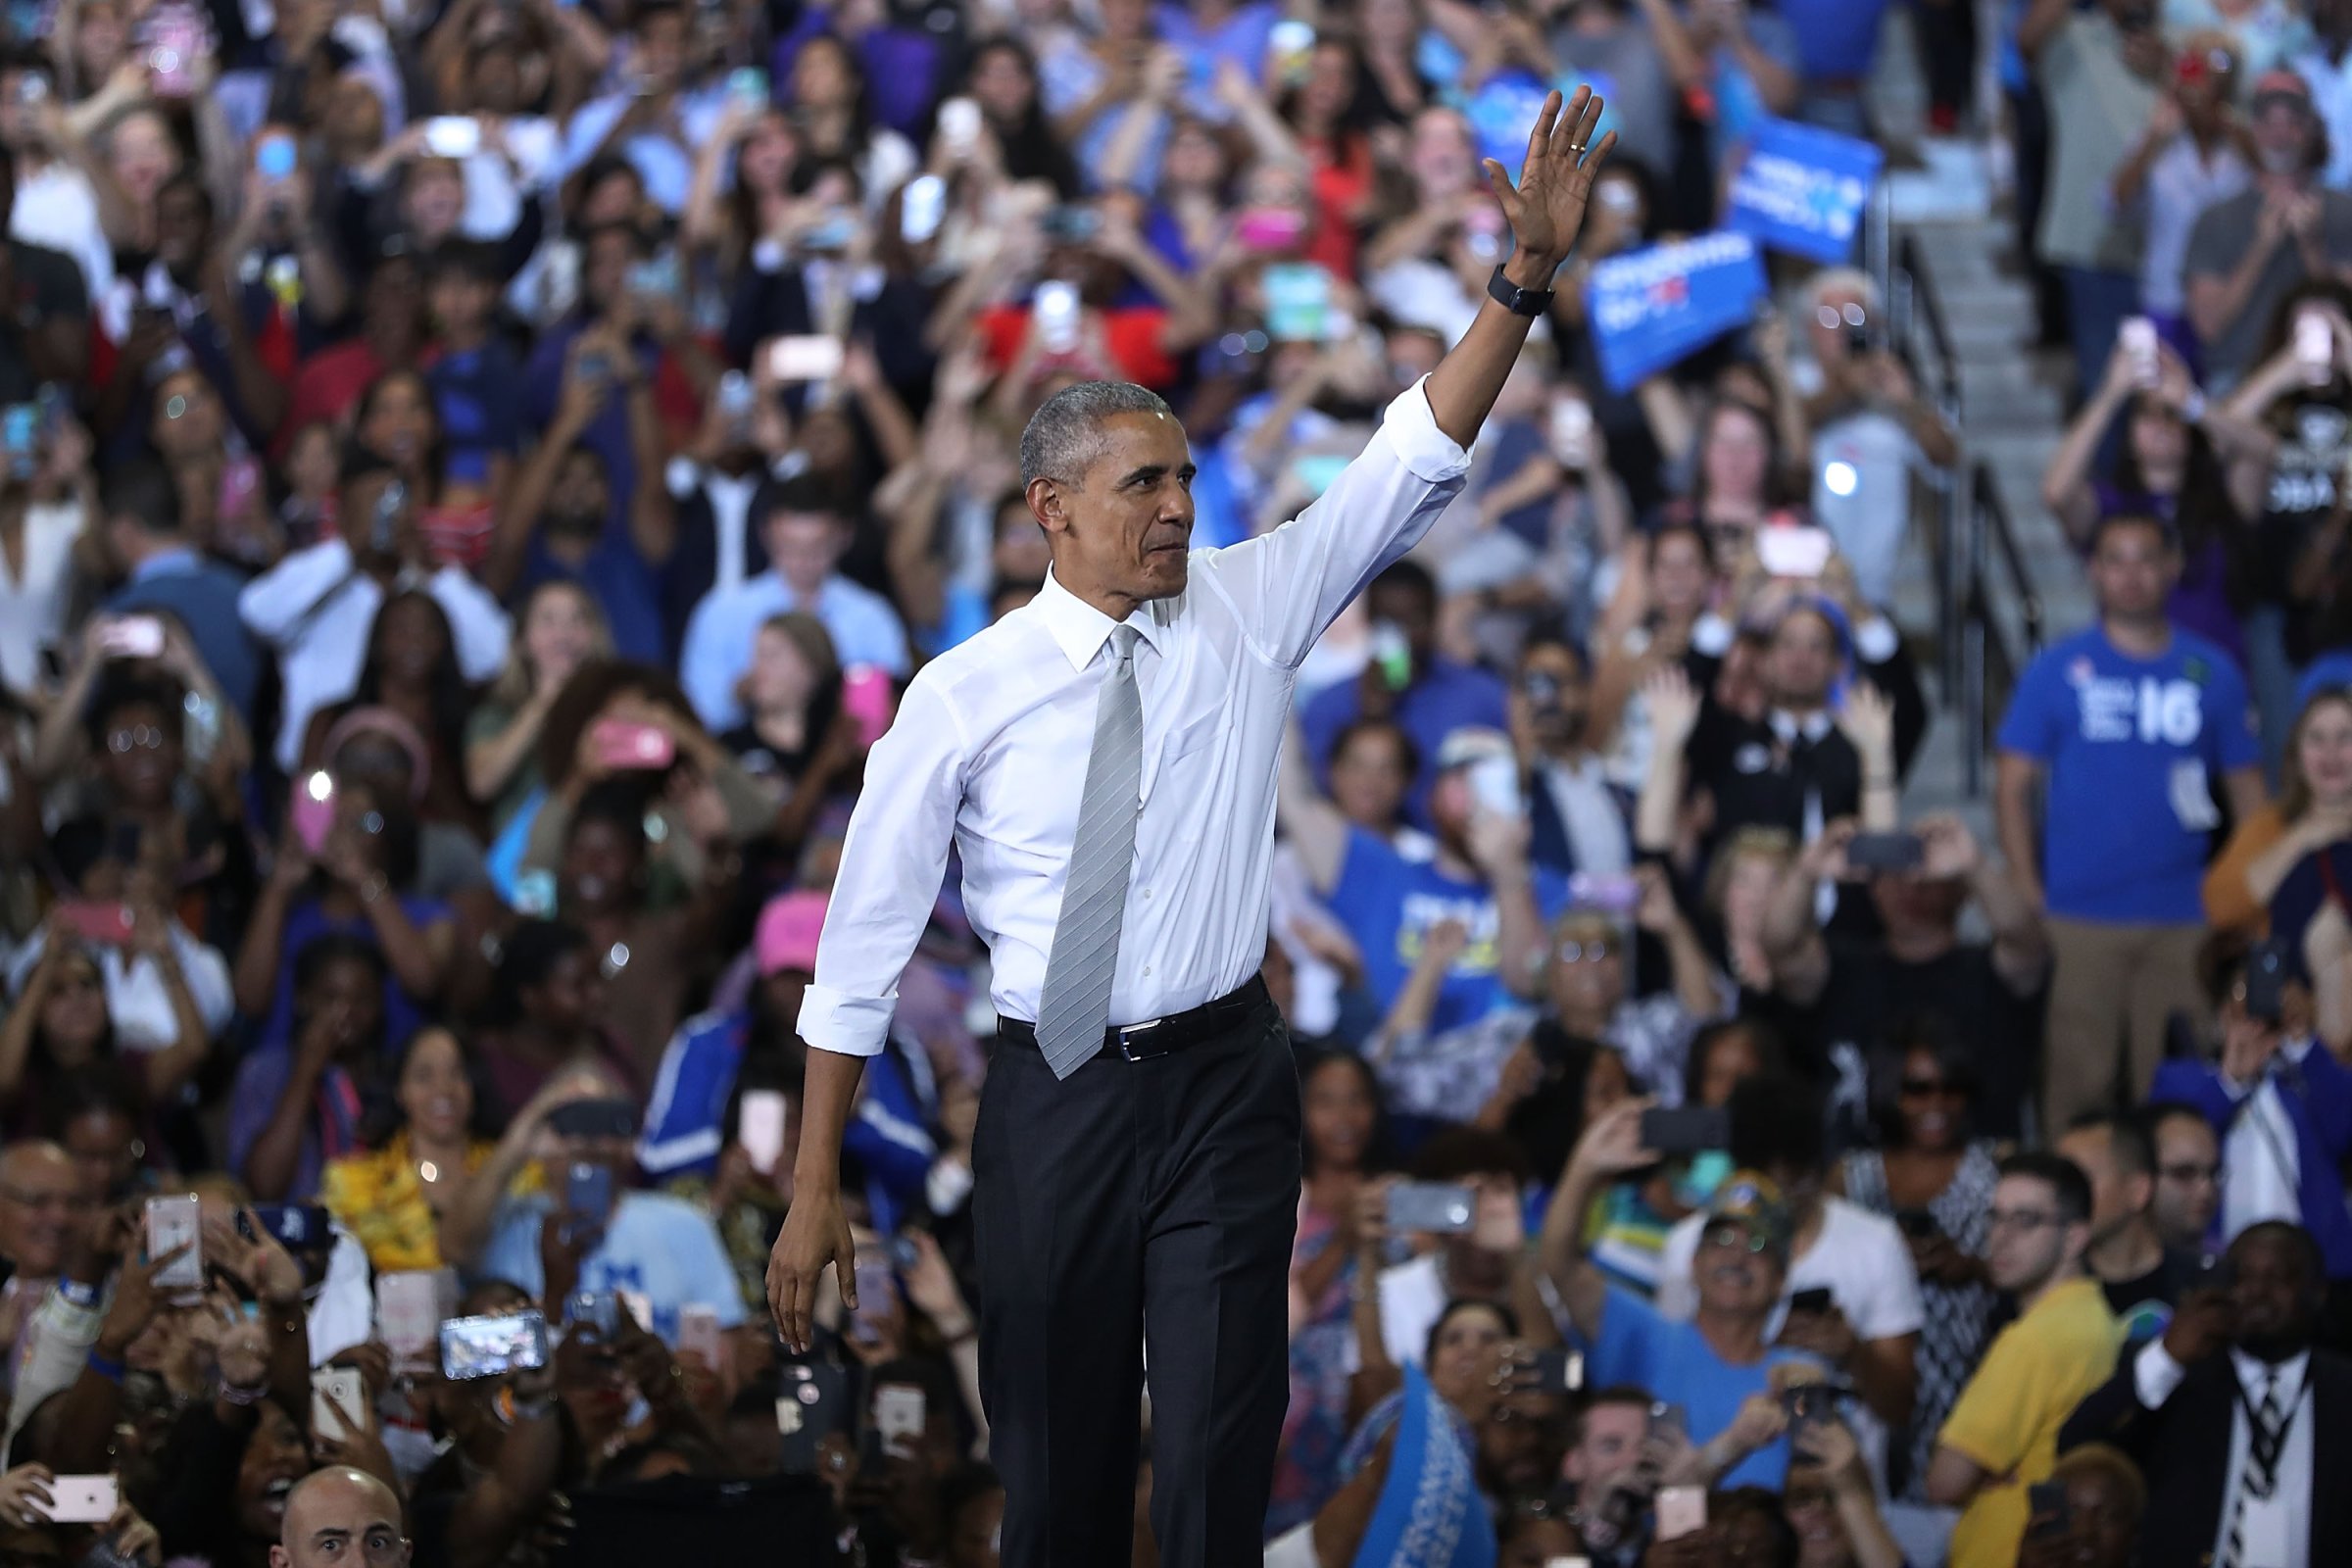 President Obama Campaigns For Hillary Clinton In Orlando, Florida